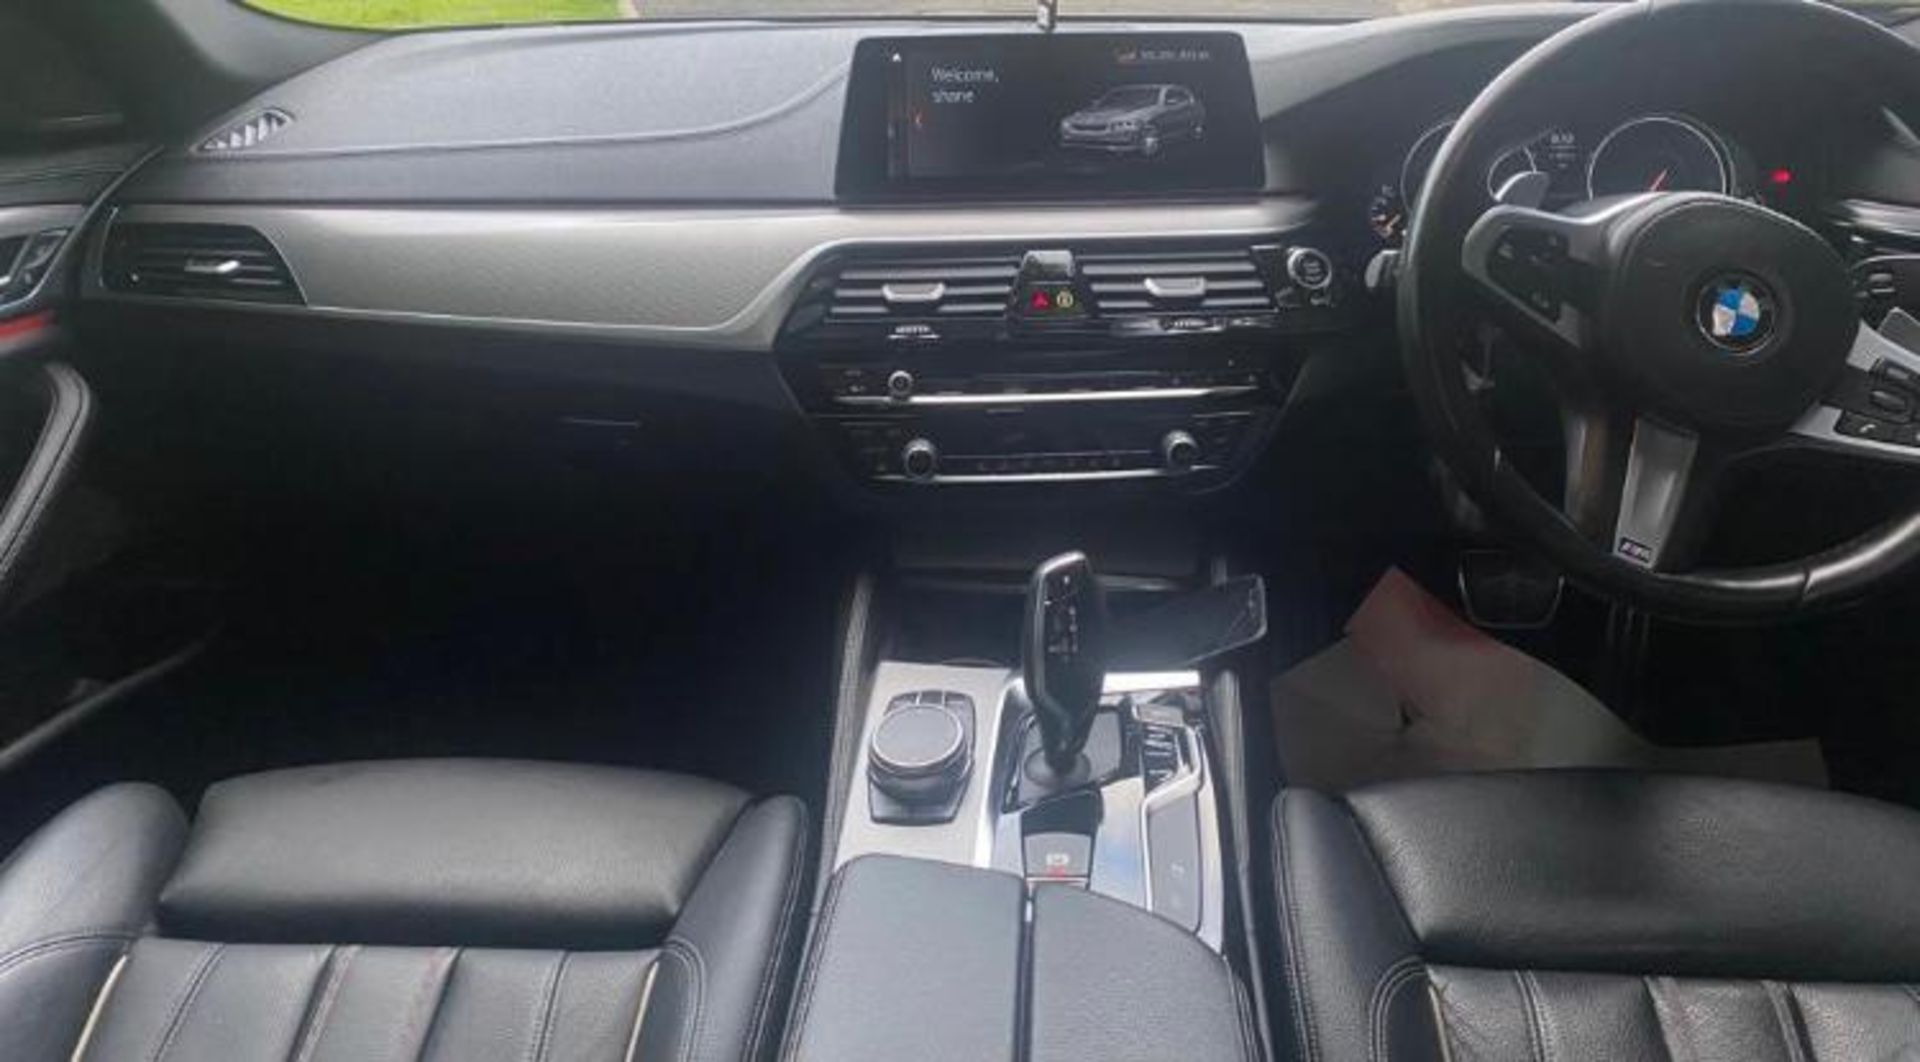 BMW 520D M SPORT 2018 LOCATION NORTHERN IRELAND - Image 6 of 6